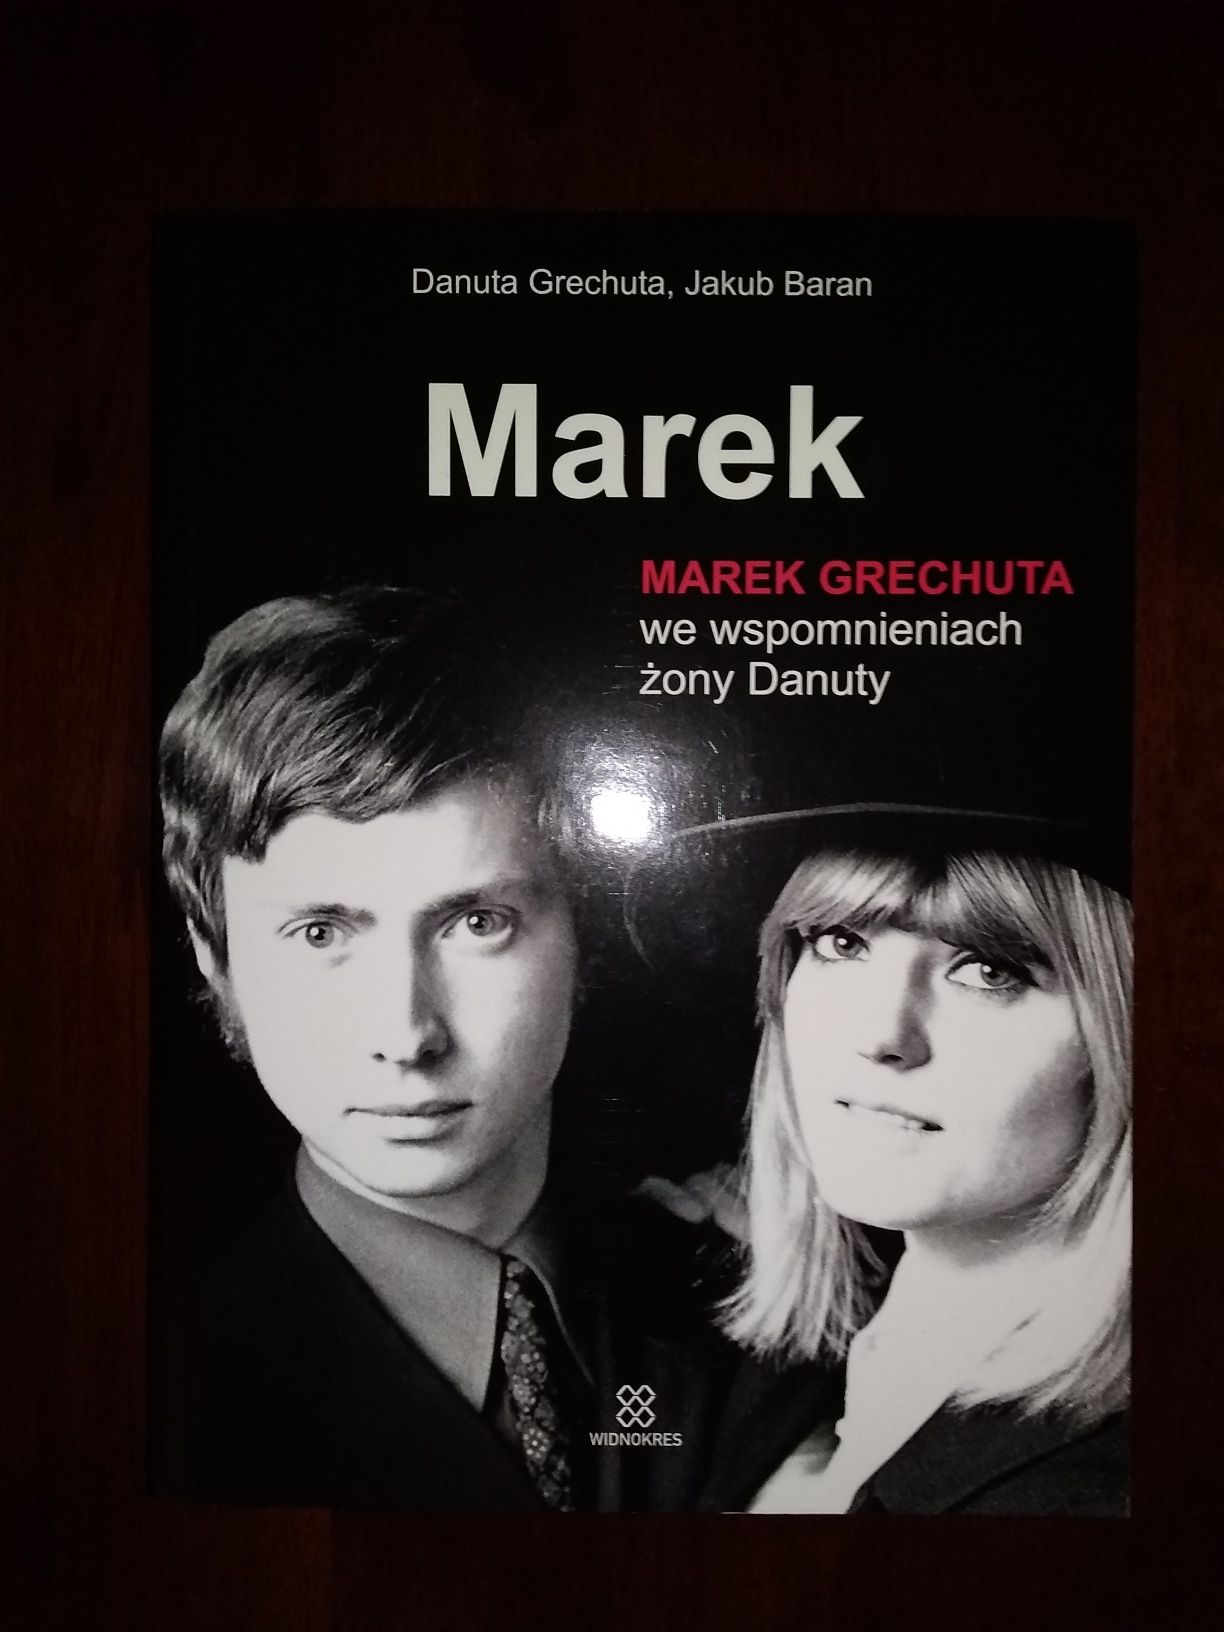 Danuta Grechuta, Jakub Baran - "Marek"